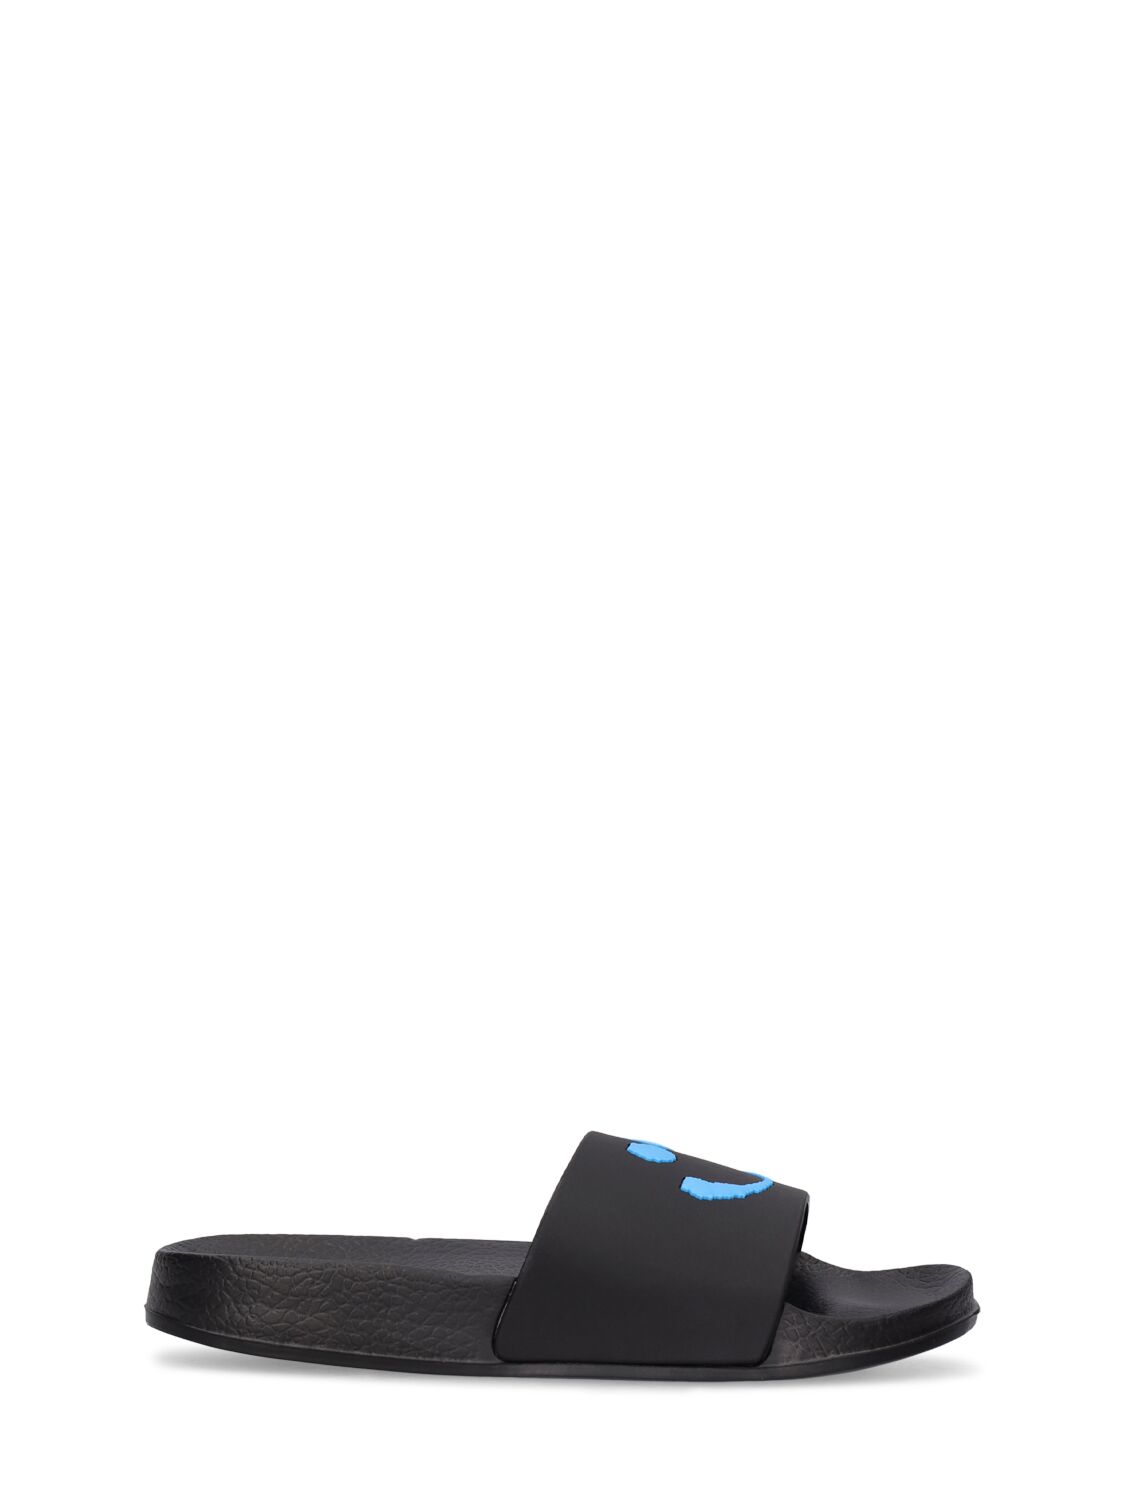 Image of Embossed Rubber Slide Sandals